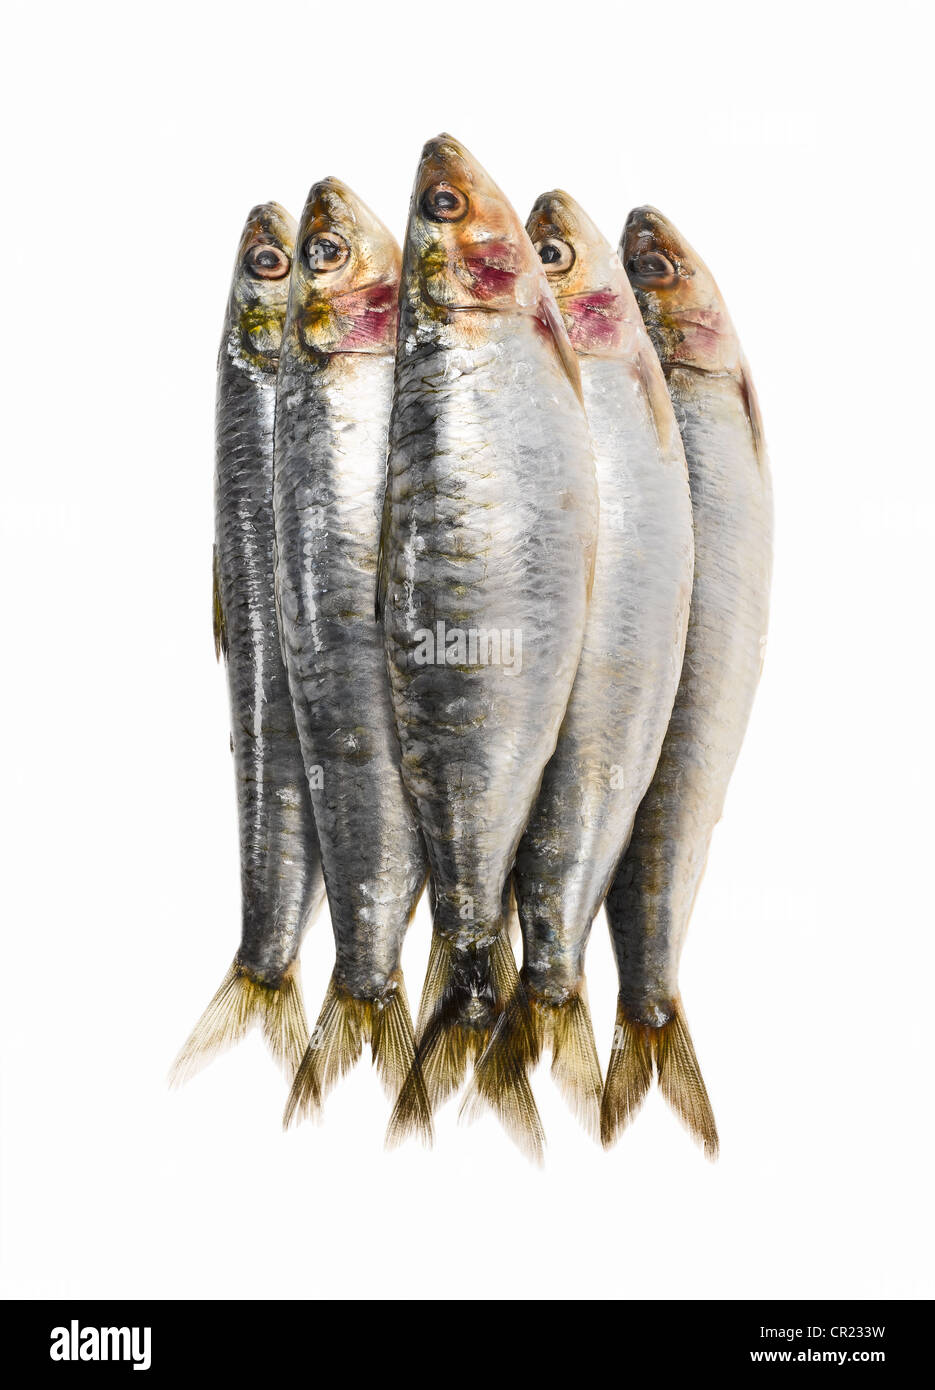 sardines Stock Photo